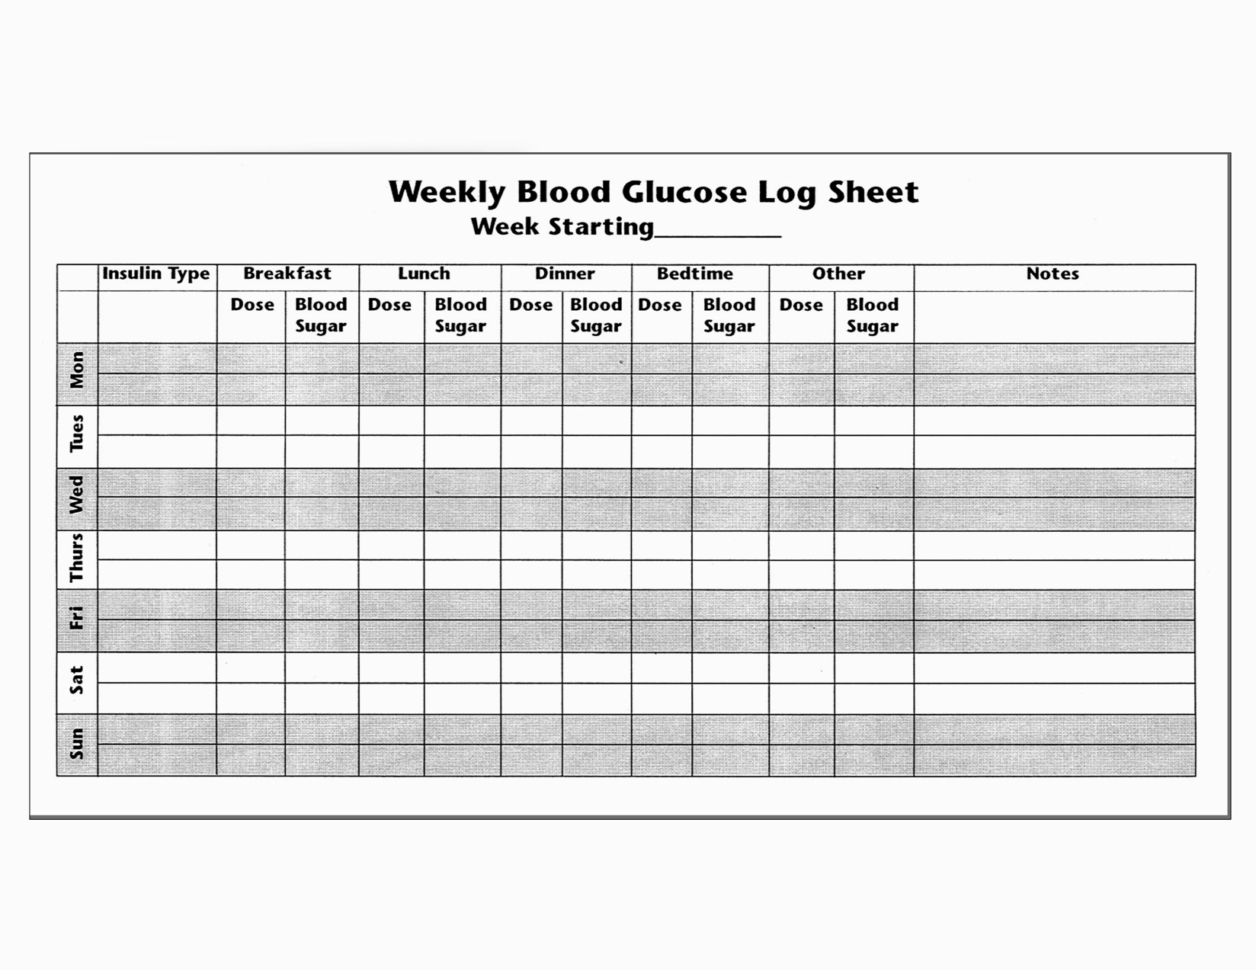 diabetes-glucose-log-spreadsheet-regarding-blood-sugar-journal-template-printable-diabetic-log